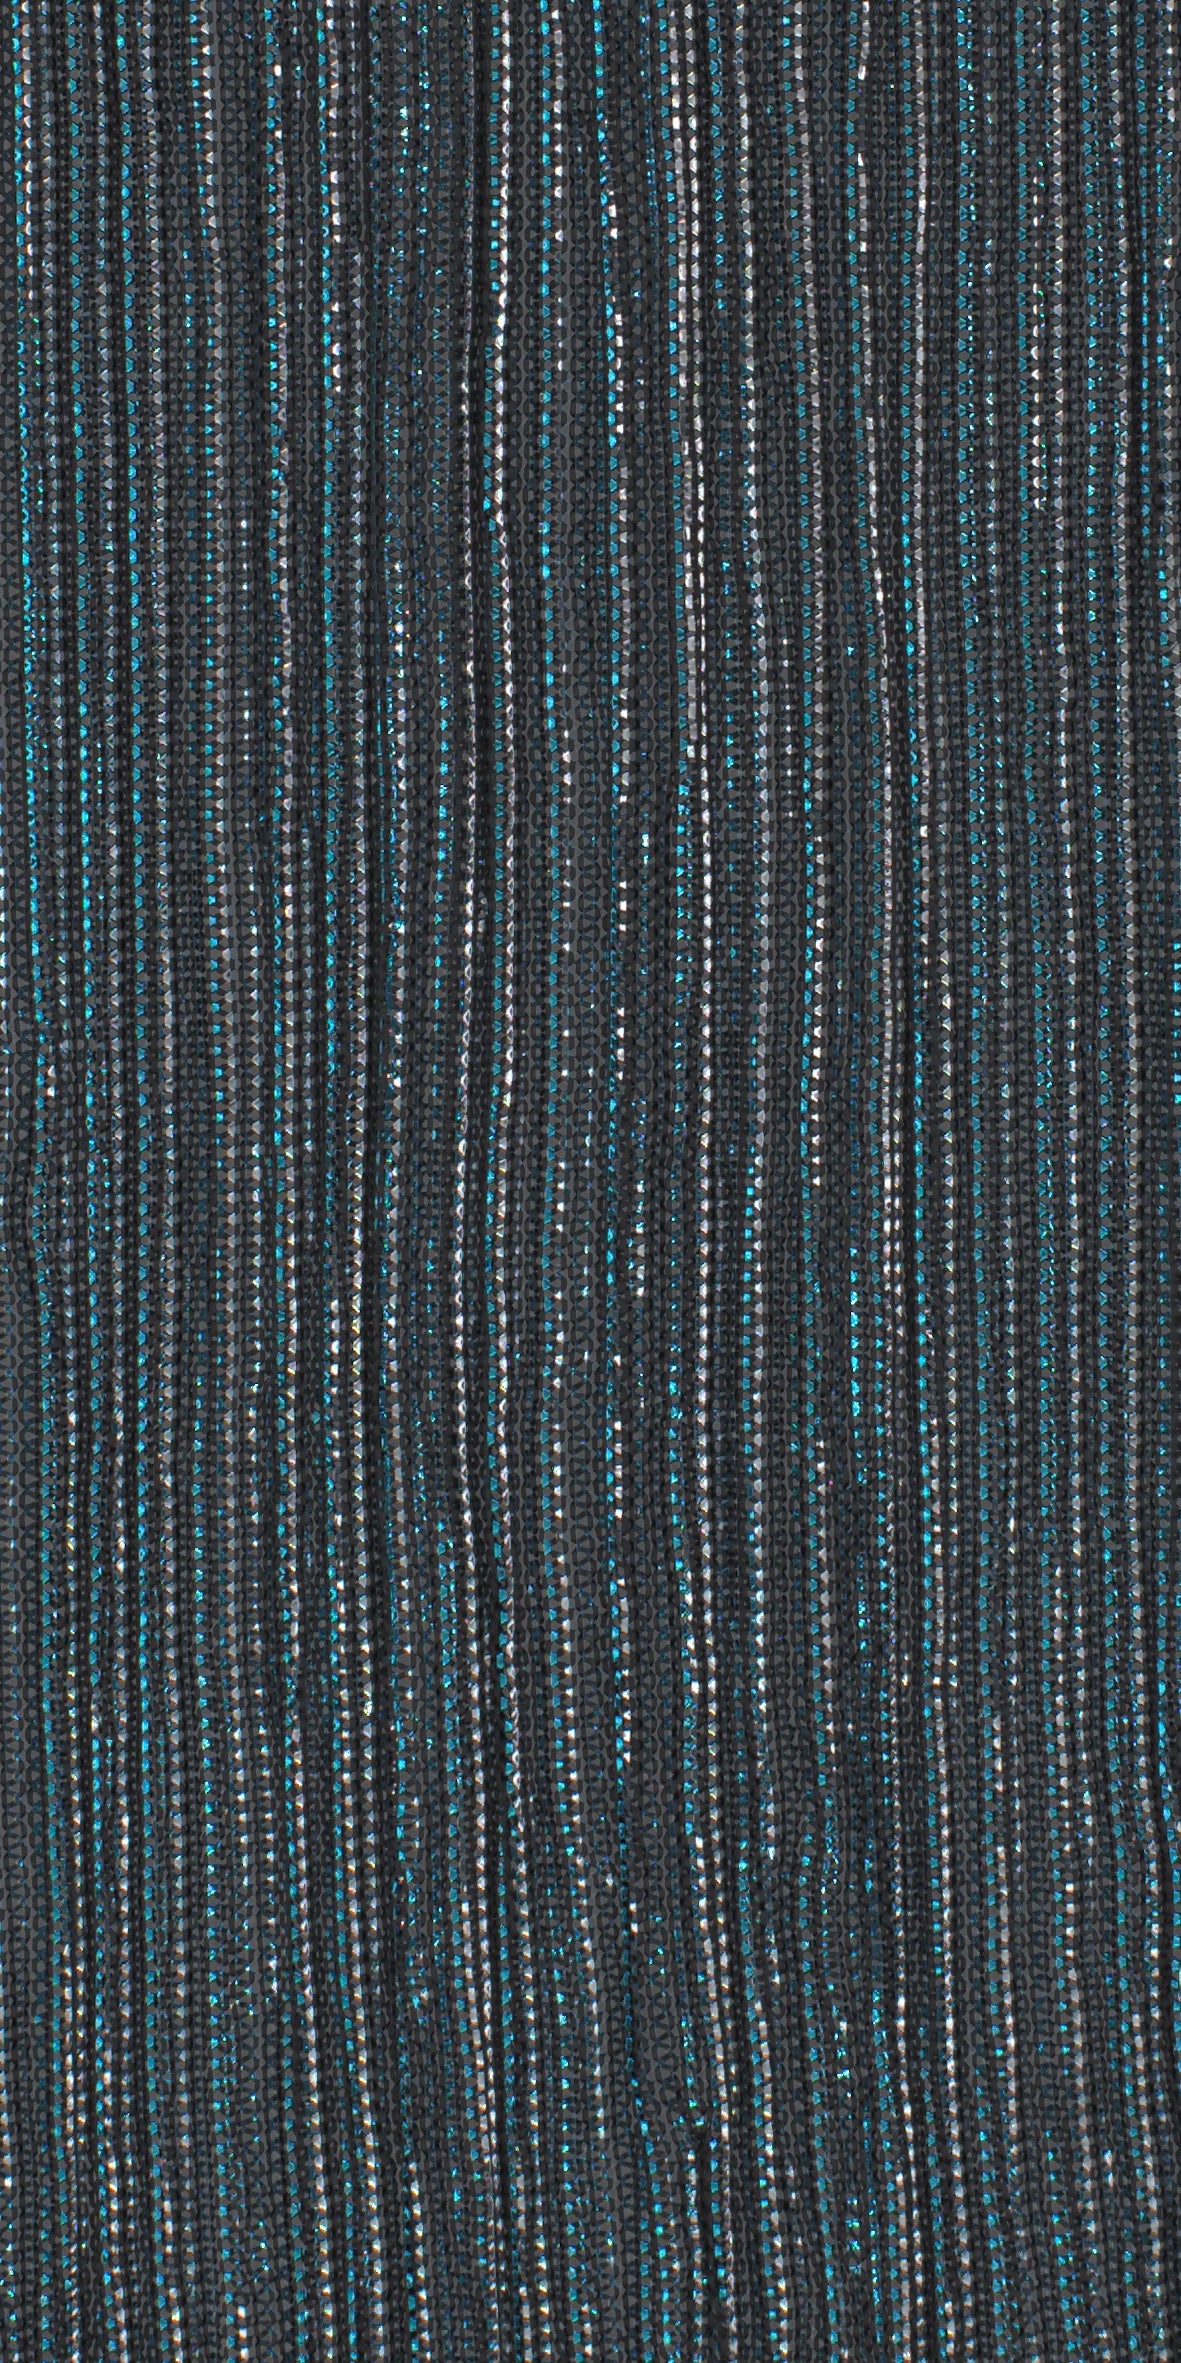 12006-10 Light Blue Silver Black Metallic Pleat Plain Dyed Blend 126g/yd 56" black blend blue knit metallic plain dyed pleat ppl new silver Metallic, Pleat - knit fabric - woven fabric - fabric company - fabric wholesale - fabric b2b - fabric factory - high quality fabric - hong kong fabric - fabric hk - acetate fabric - cotton fabric - linen fabric - metallic fabric - nylon fabric - polyester fabric - spandex fabric - chun wing hing - cwh hk - fabric worldwide ship - 針織布 - 梳織布 - 布料公司- 布料批發 - 香港布料 - 秦榮興